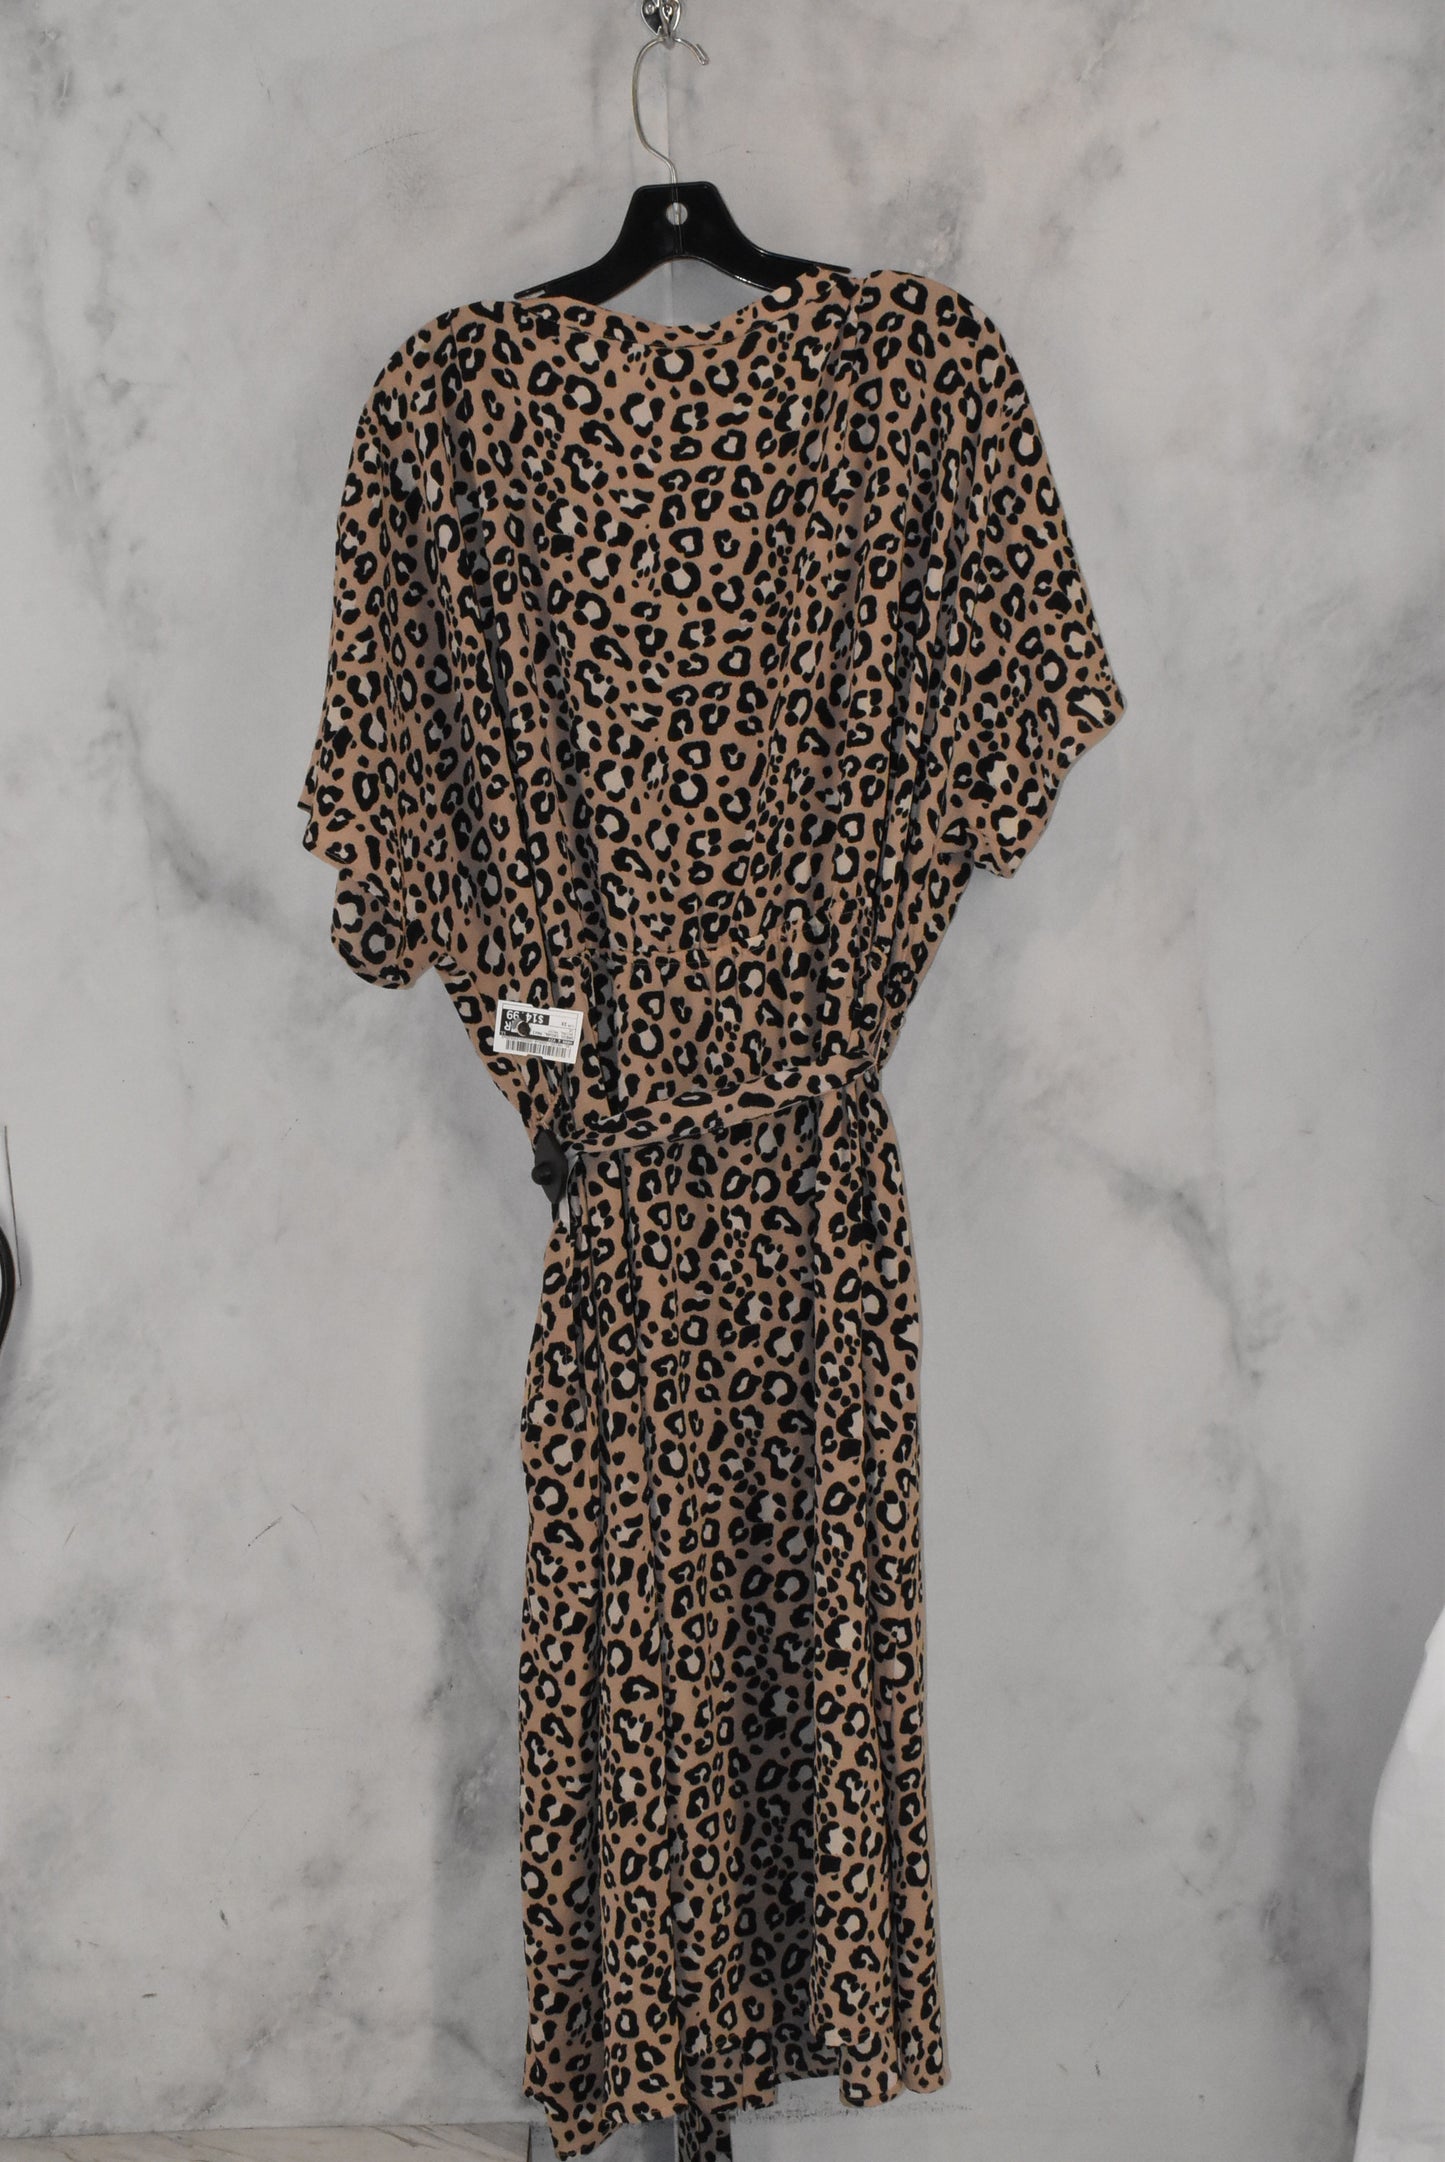 Dress Casual Maxi By Ava & Viv  Size: 3x